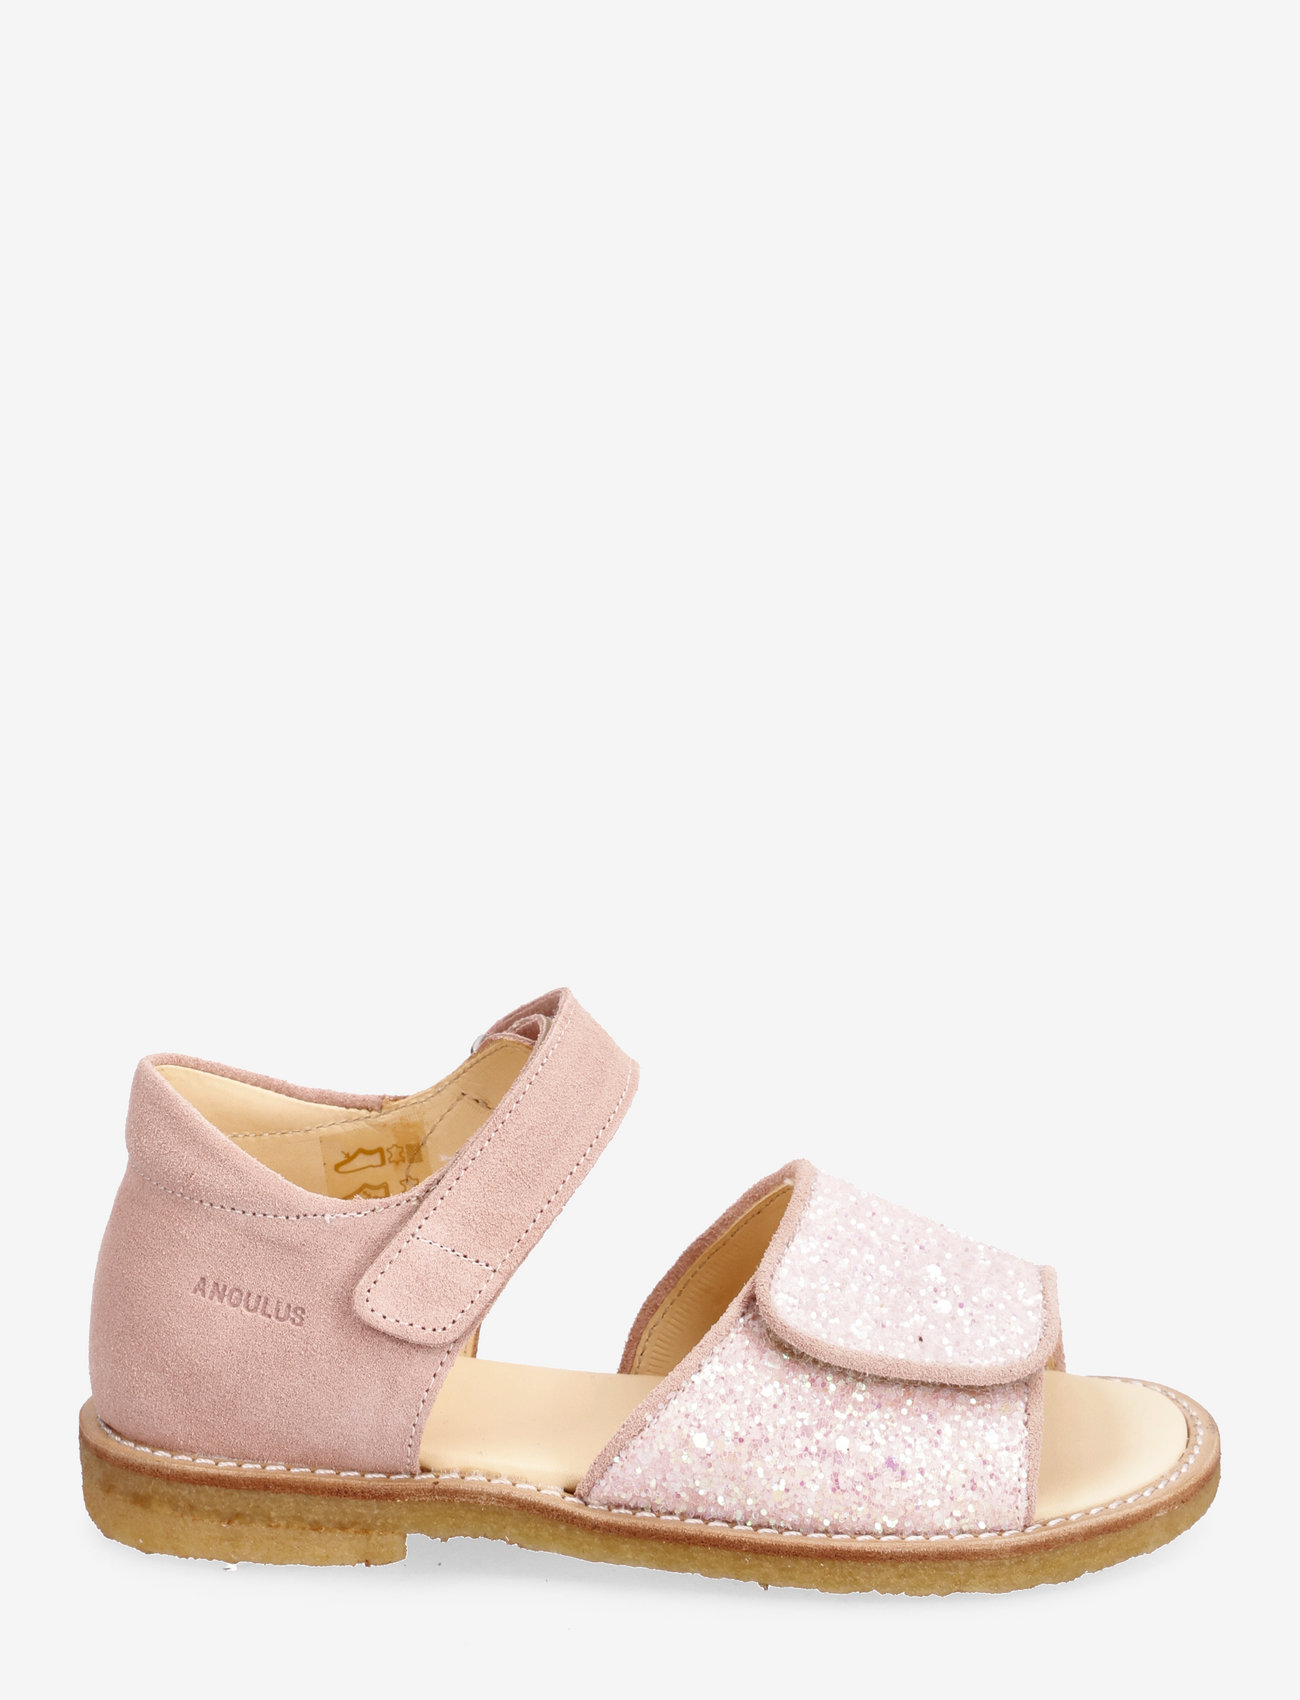 ANGULUS - Sandals - flat - open toe - clo - summer savings - 1139/2698 peach/rosa glitter - 1